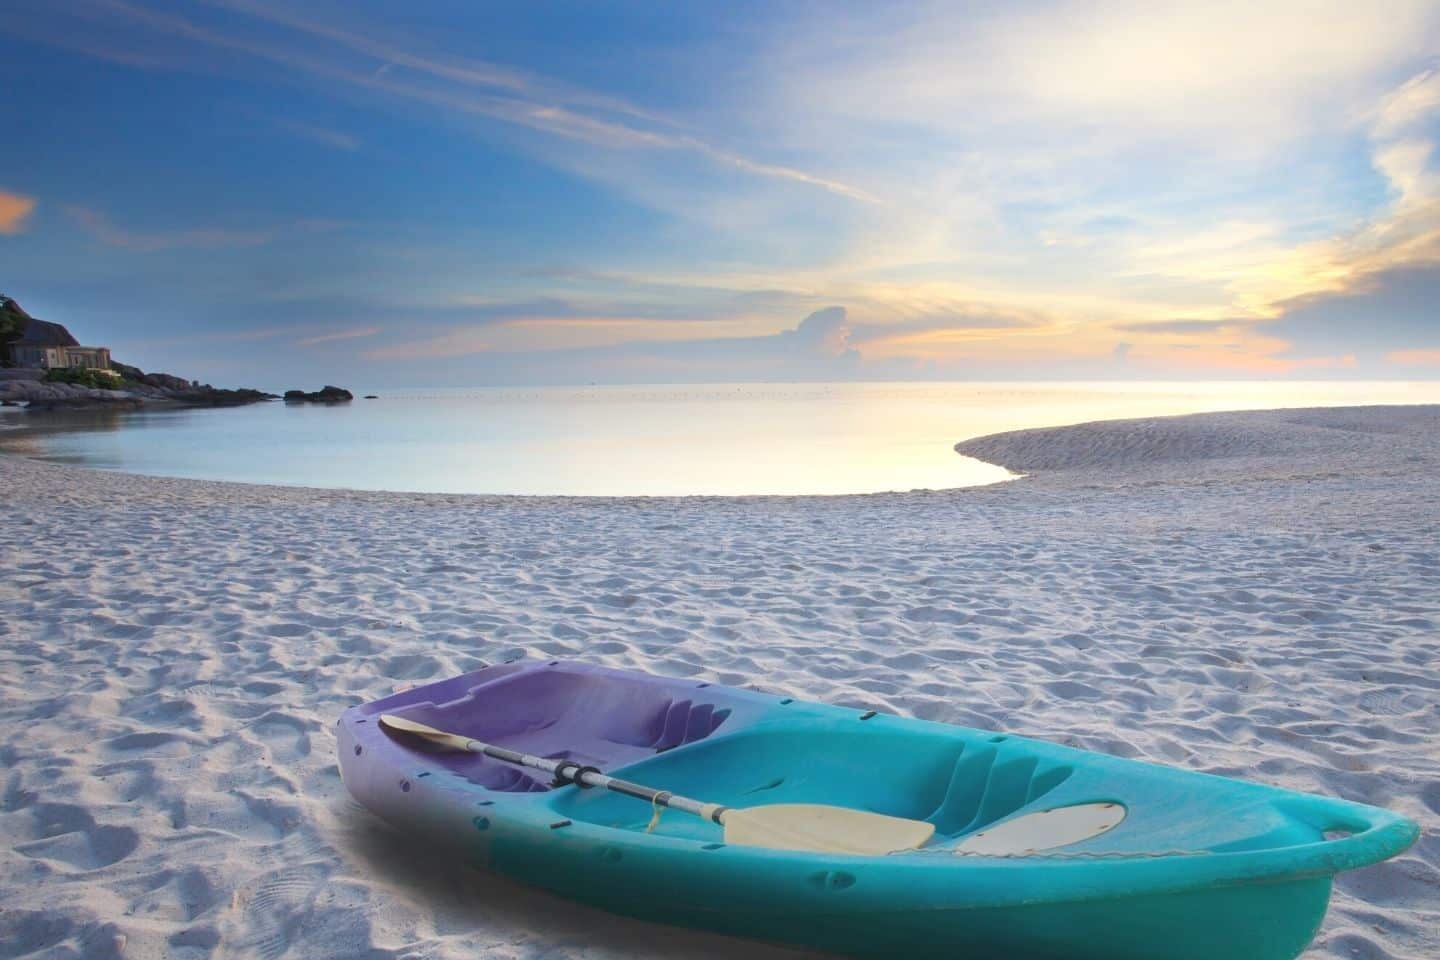 Blue kayak on the beach